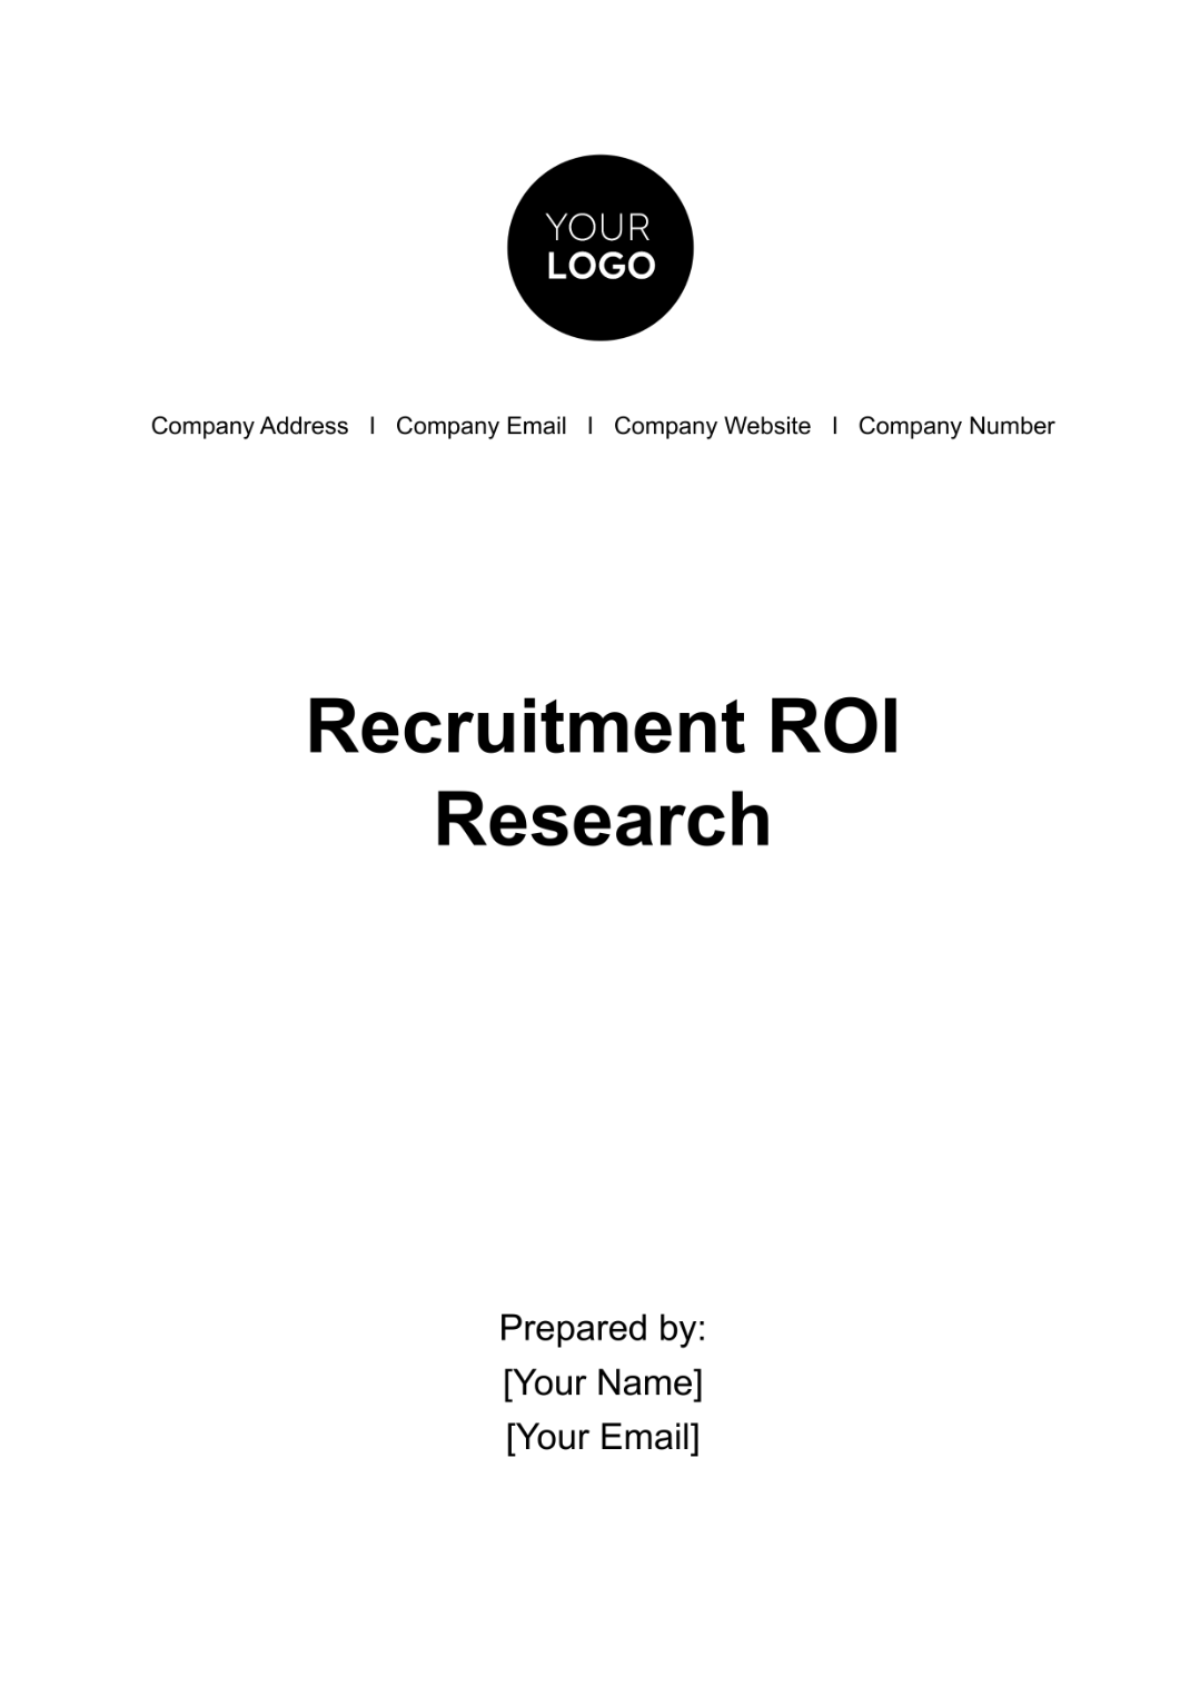 Recruitment ROI Research HR Template